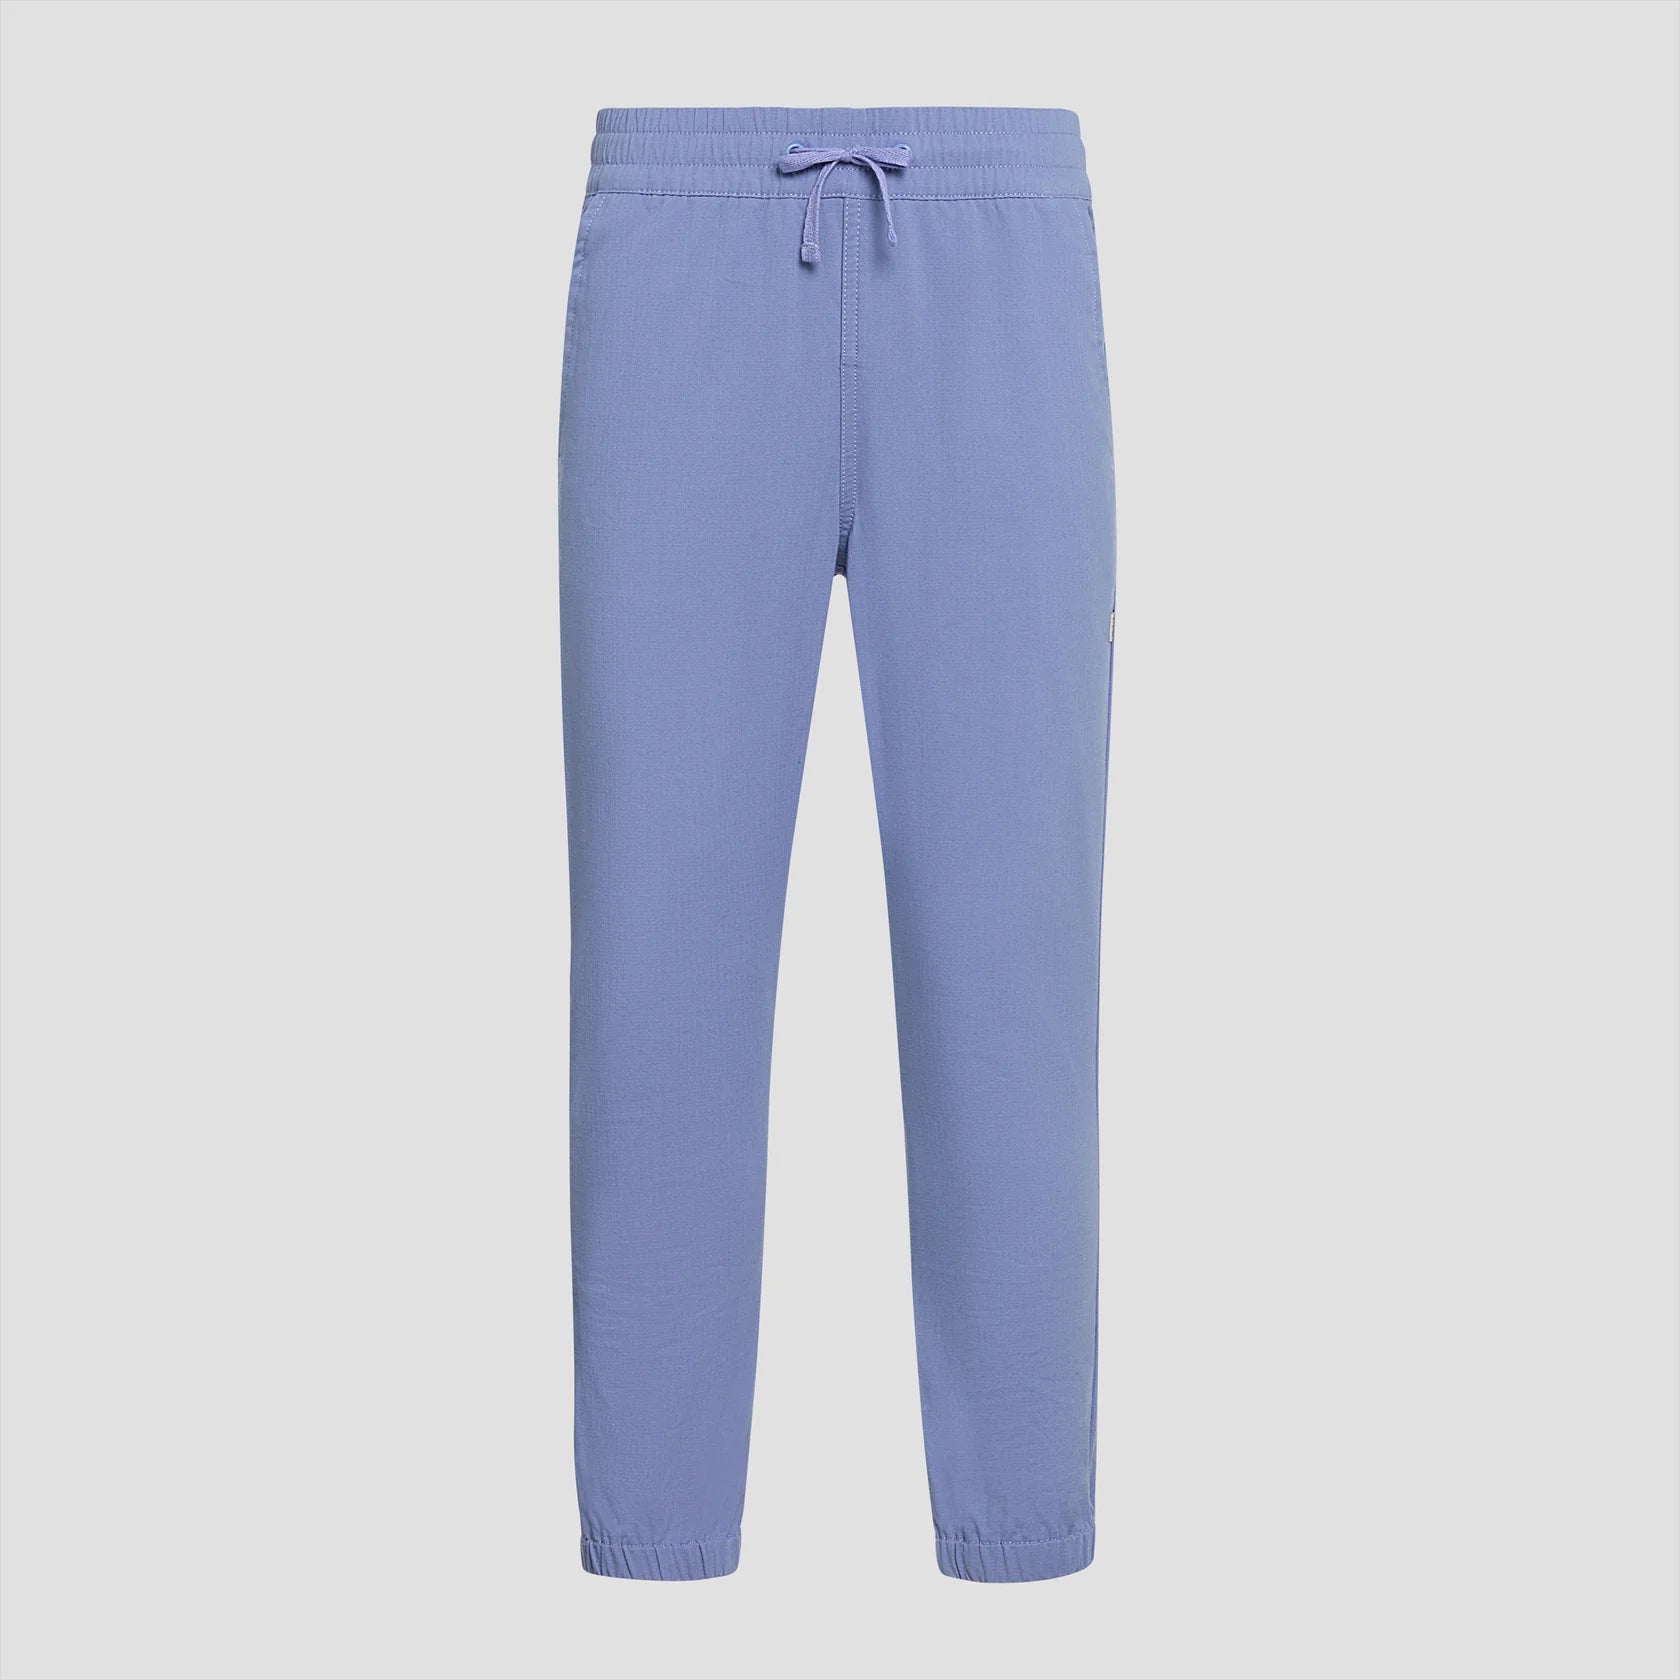 Dash leichte Ripstop Hose – Purple Blue